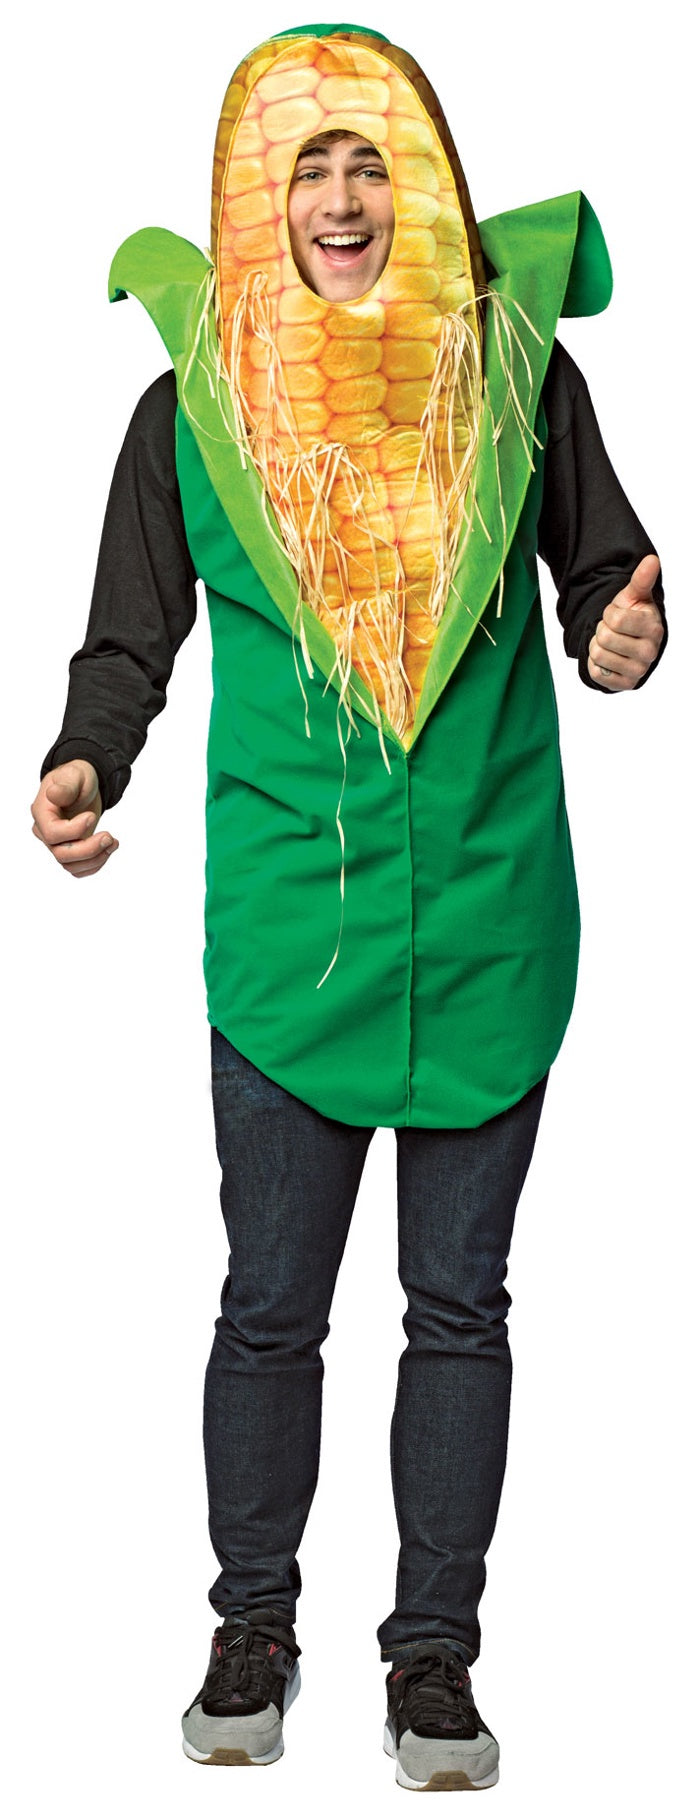 Get Real Corn Costume